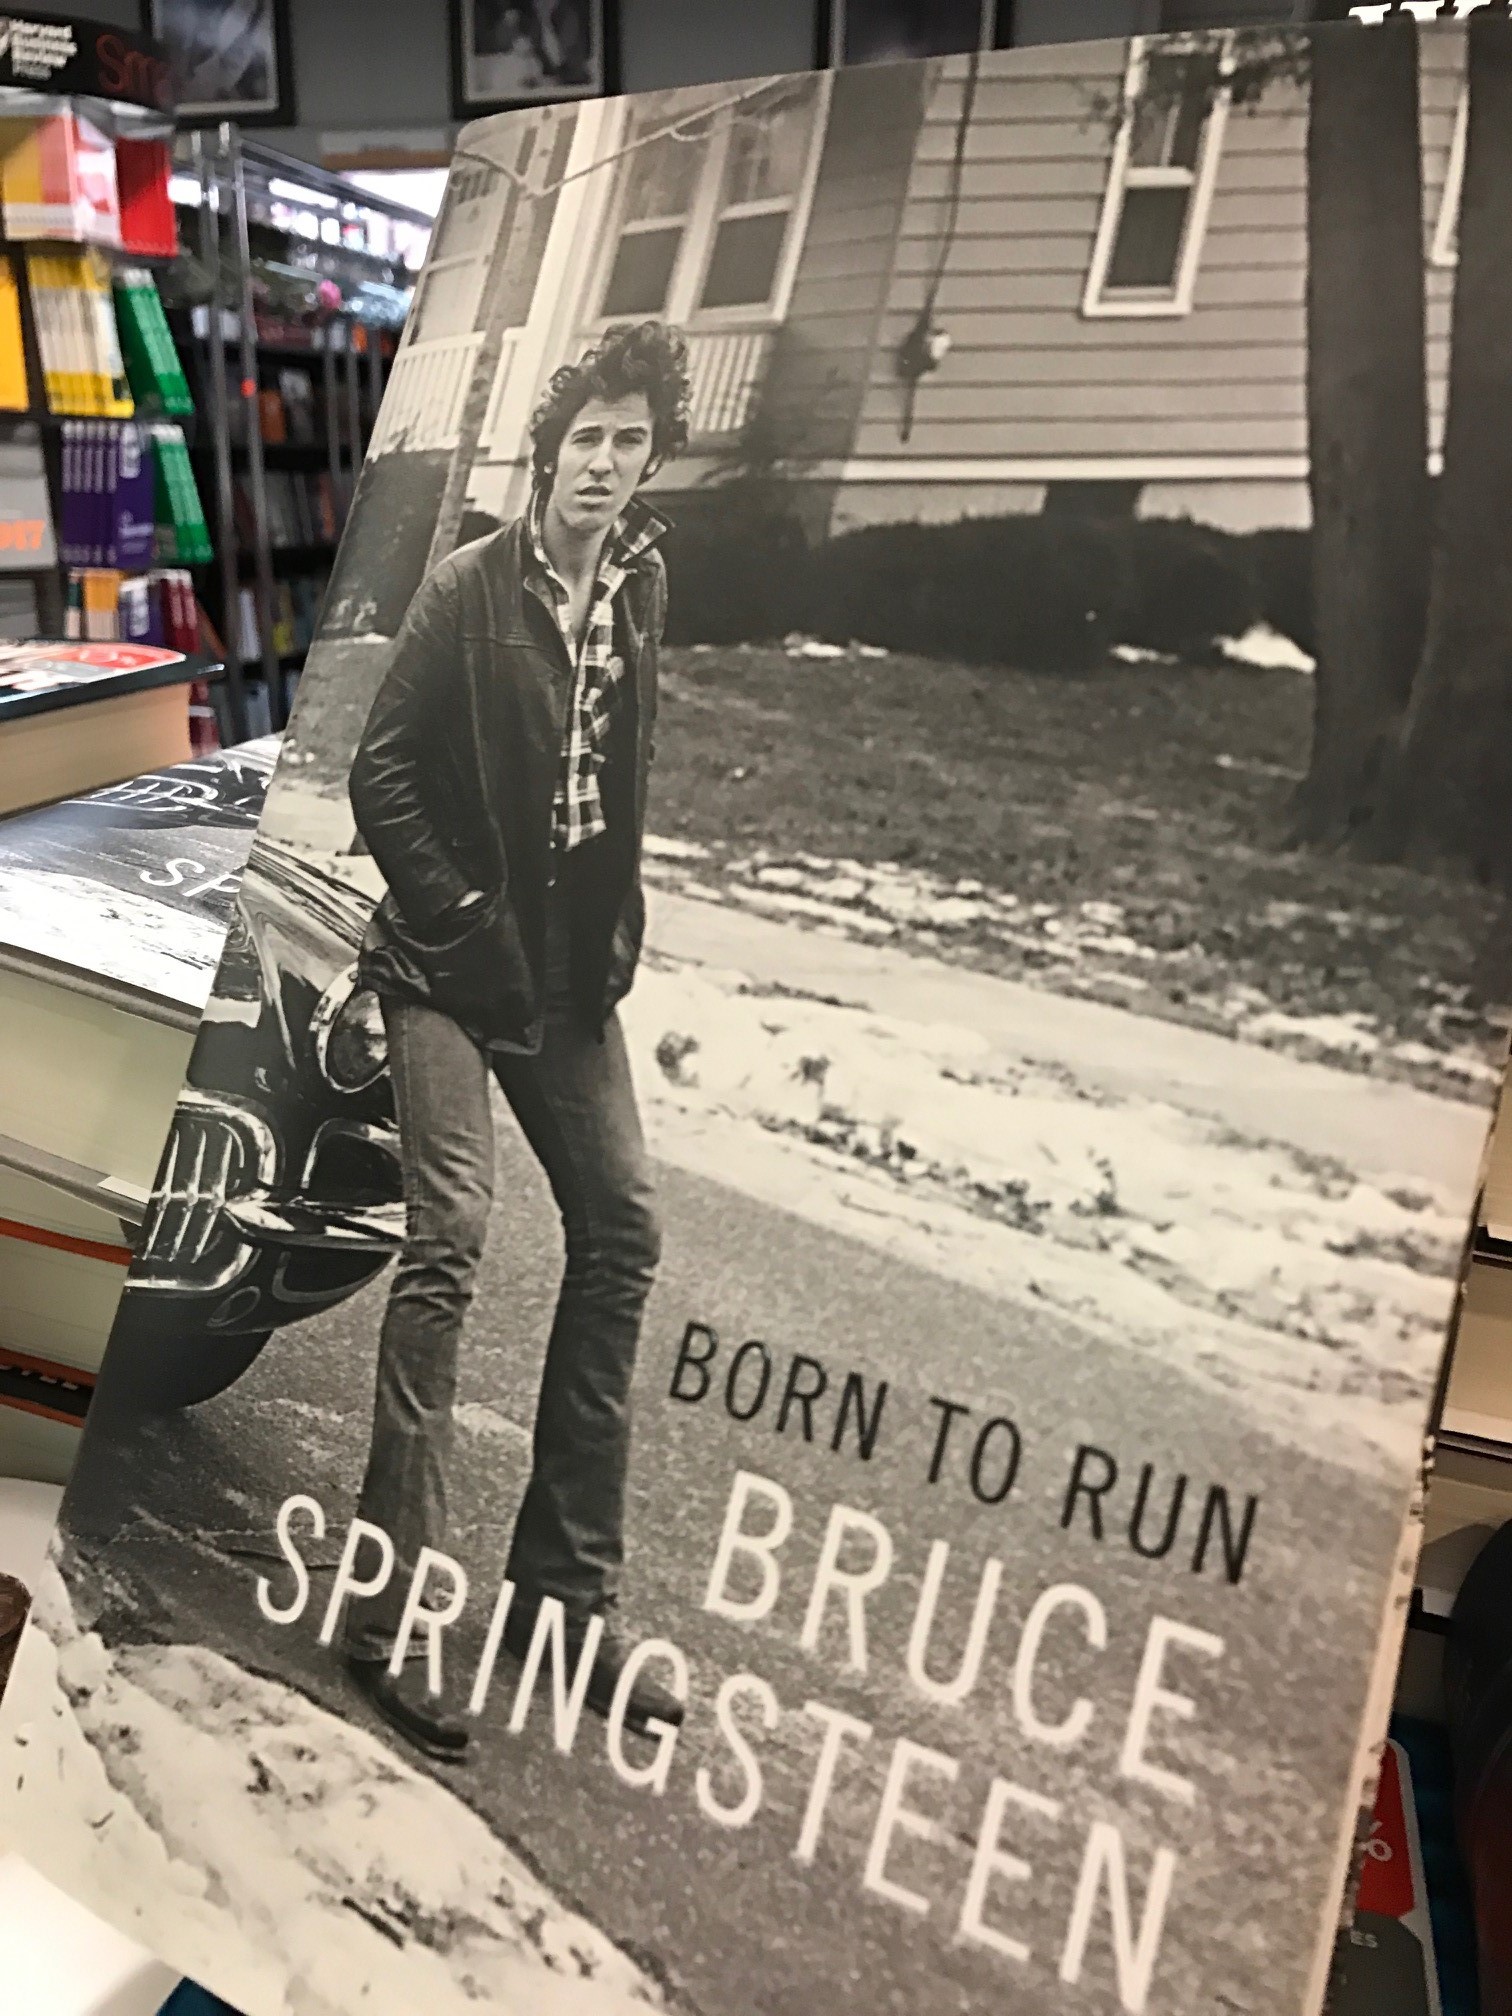 Bruce Springsteen's 'Born To Run' book (Credit: WBBM/Lisa Fielding)